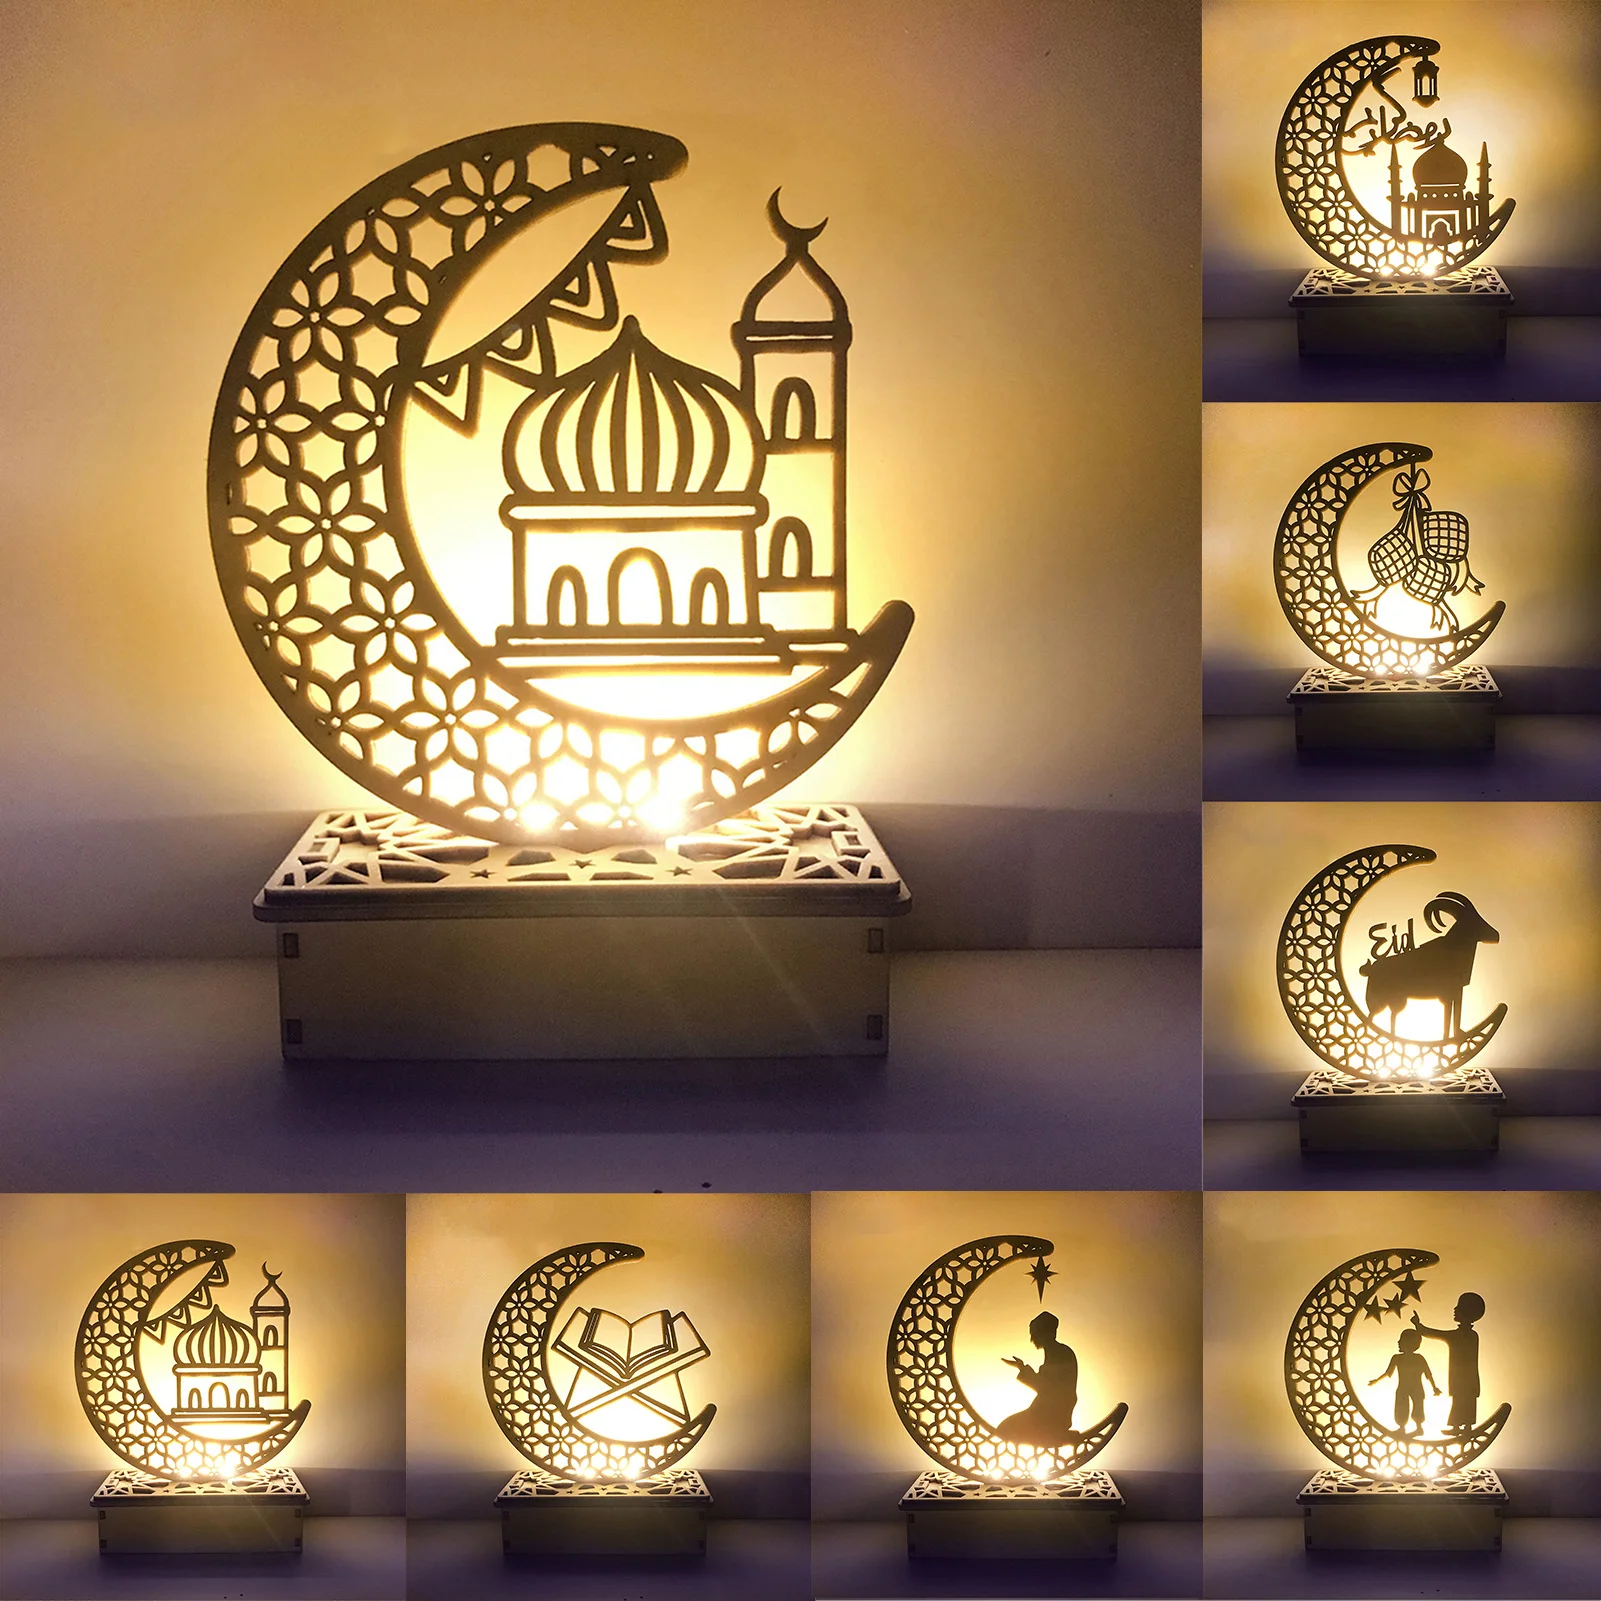 Pendant Eid Mubarak Ramadan Kareem English Letters Wooden Ornament Home Decor 